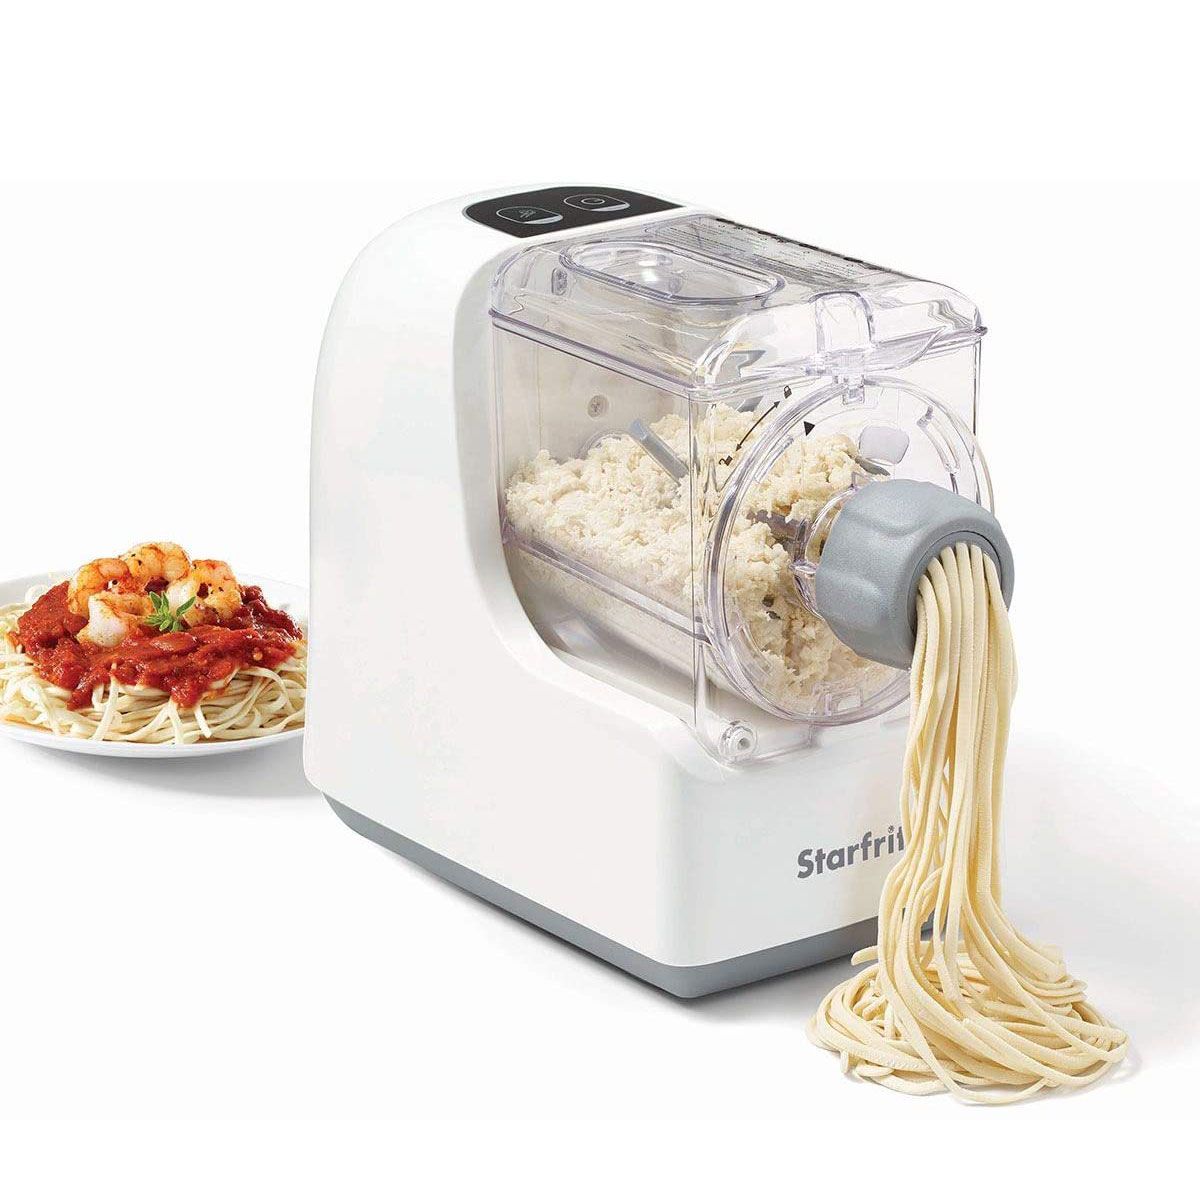 Starfrit electric machine making pasta